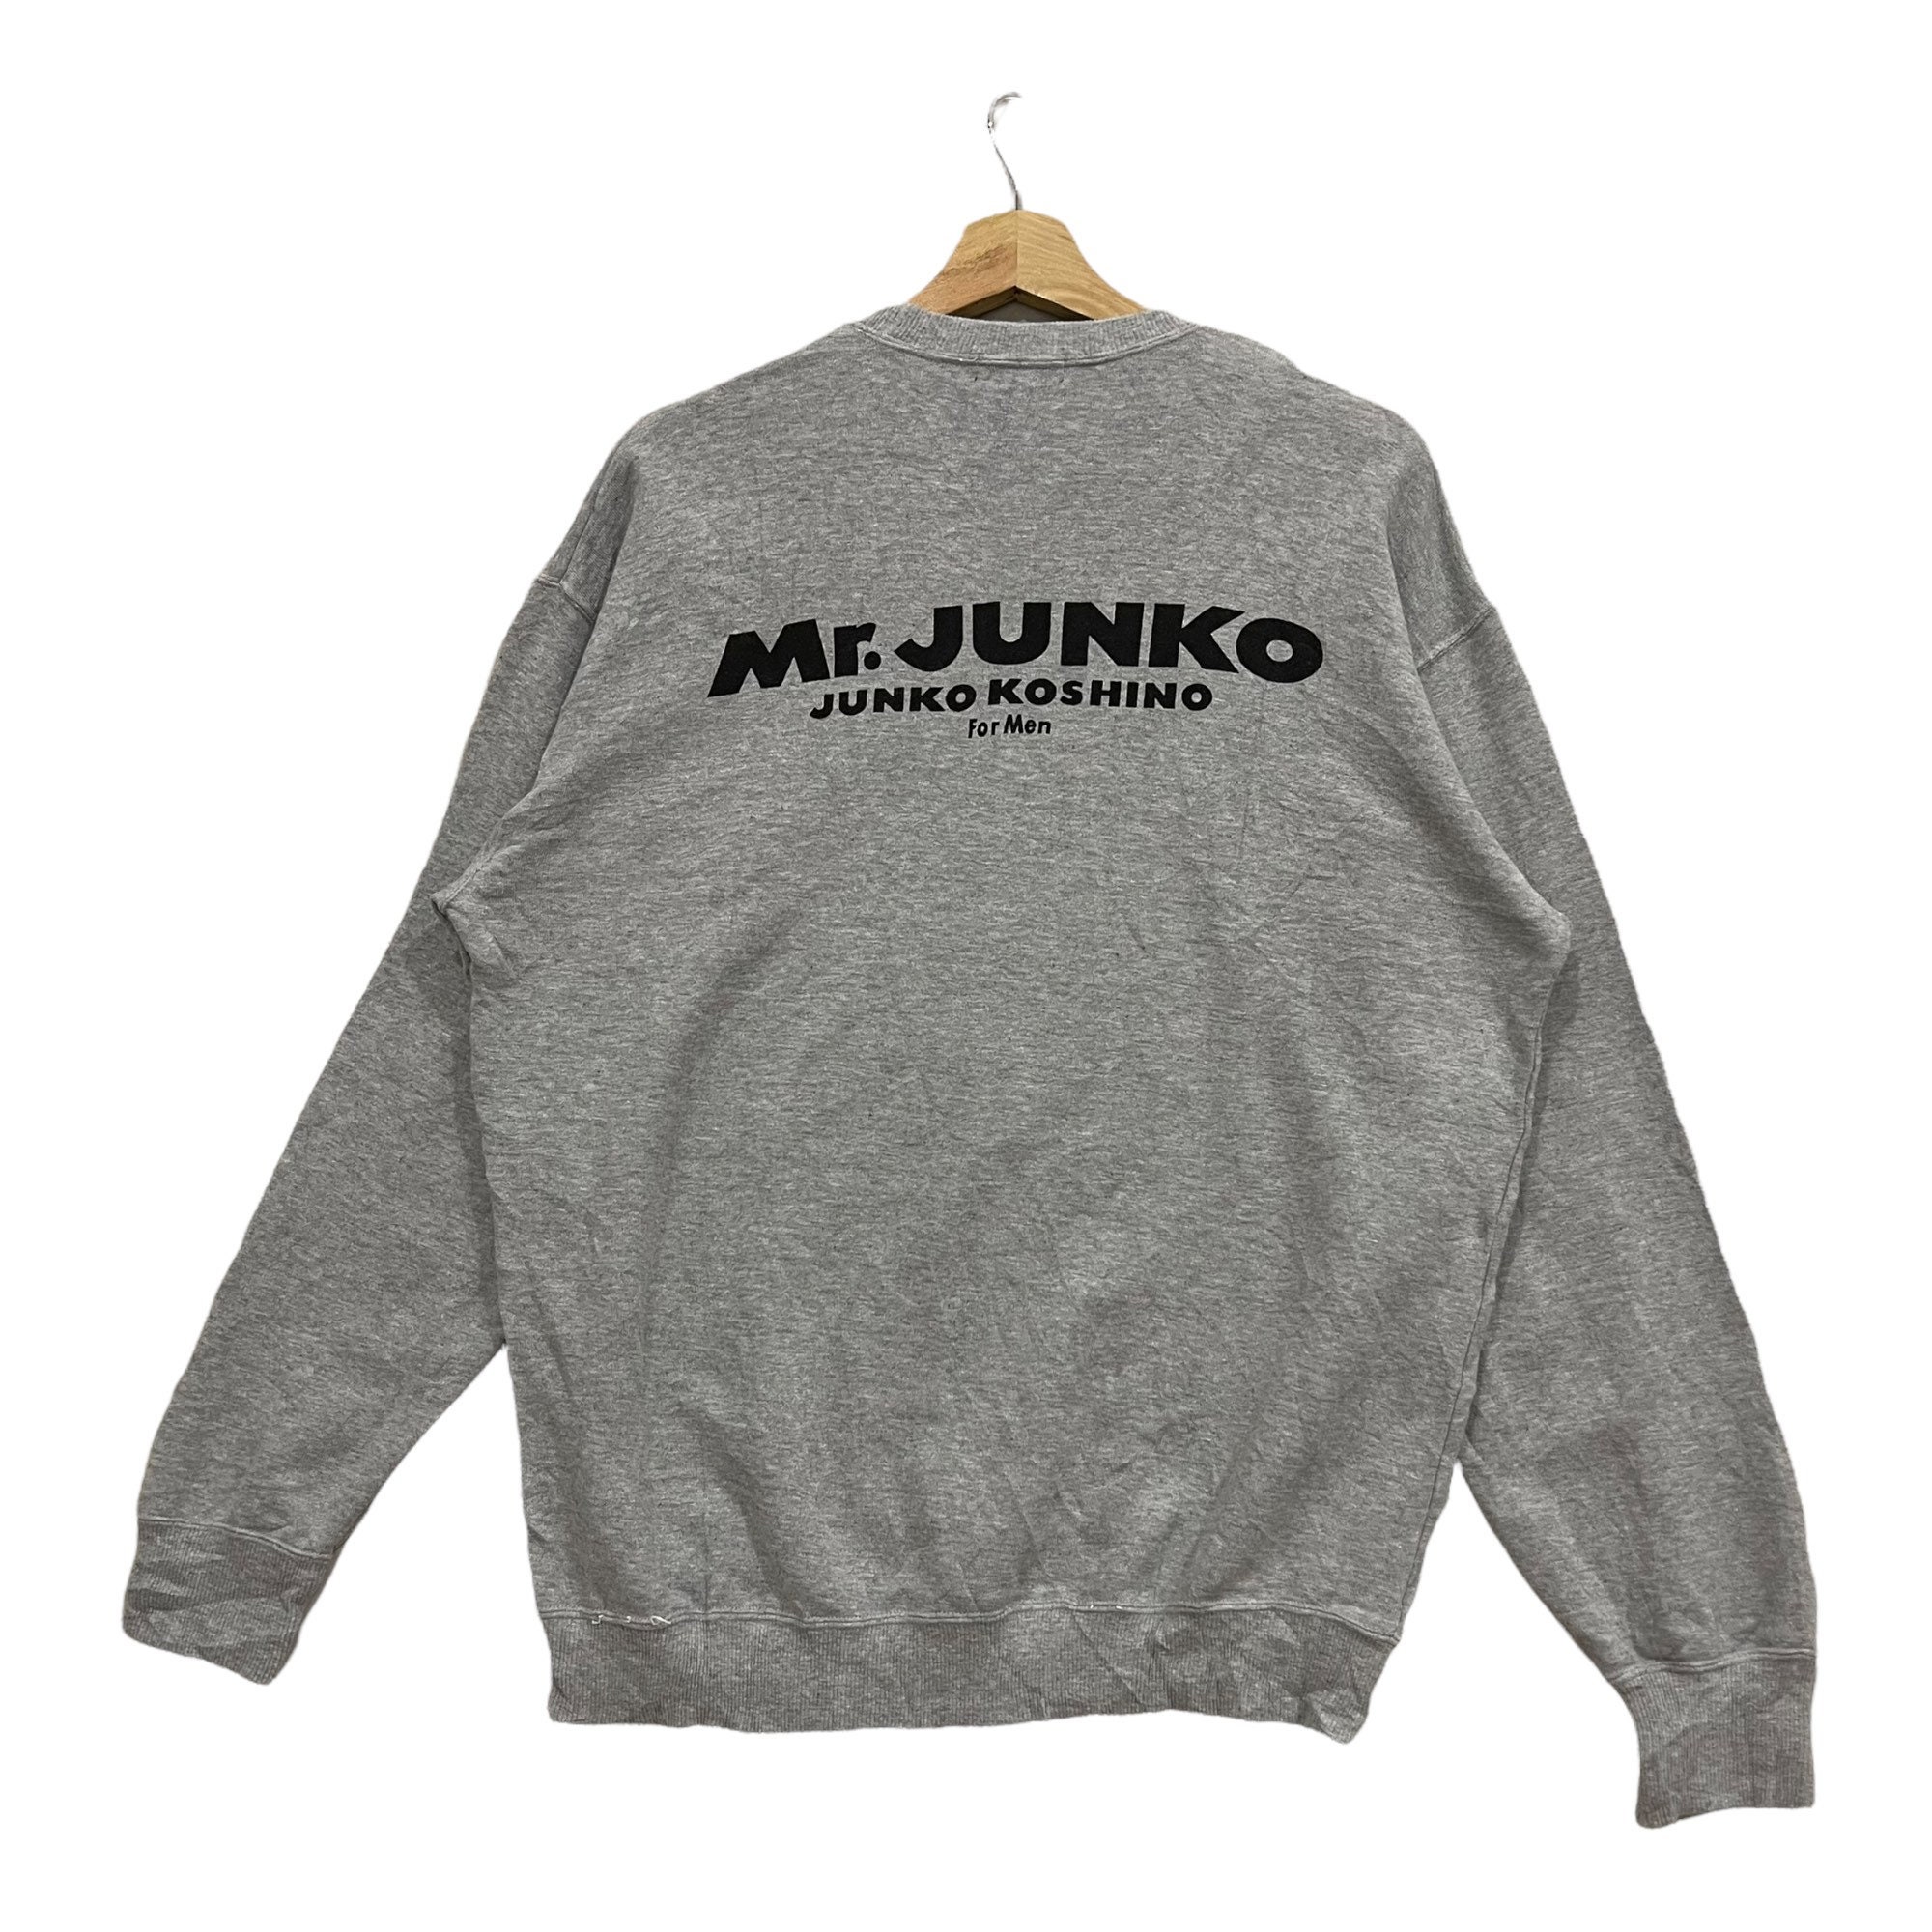 Vintage Mr Junko Junko Koshino for Men Spell Out Sweater